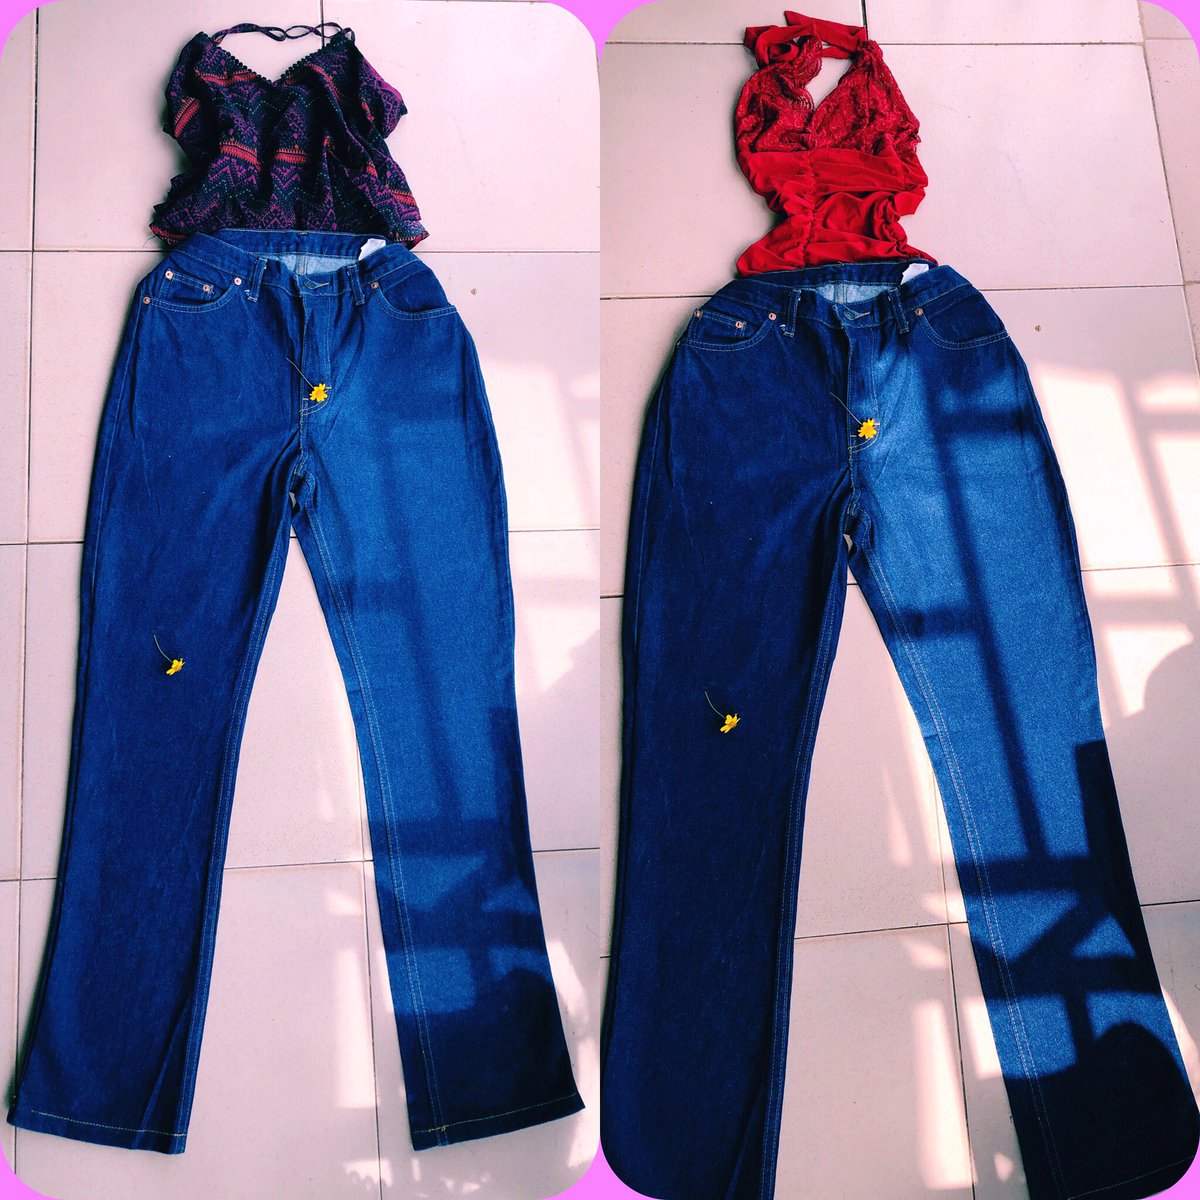 Slide 1: bf jeans      Size 18, N2,500Slide 2: bf jeans       Size 8/10, Price: N2,500Slide 3: bf jeans       Size 16, Price: N2,500Slide 4: bf jeans       Size 12/14, Price N2,500